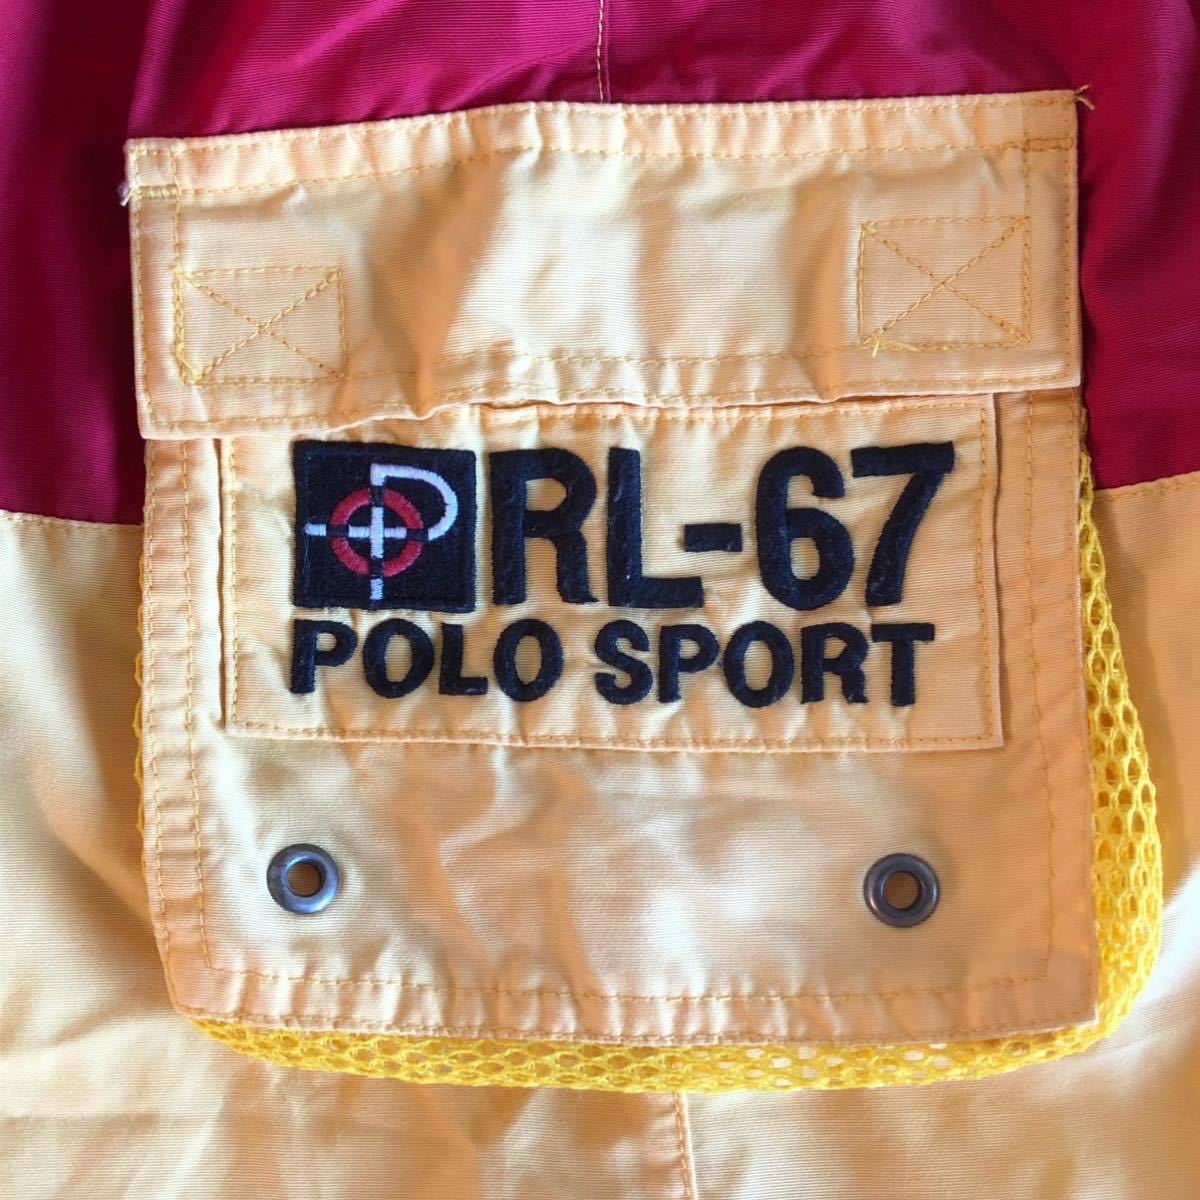 POLO SPORT RALPH LAUREN swim shorts плавки red yellow красный желтый rrl country sport 1992 1993 stadium wing snow beach